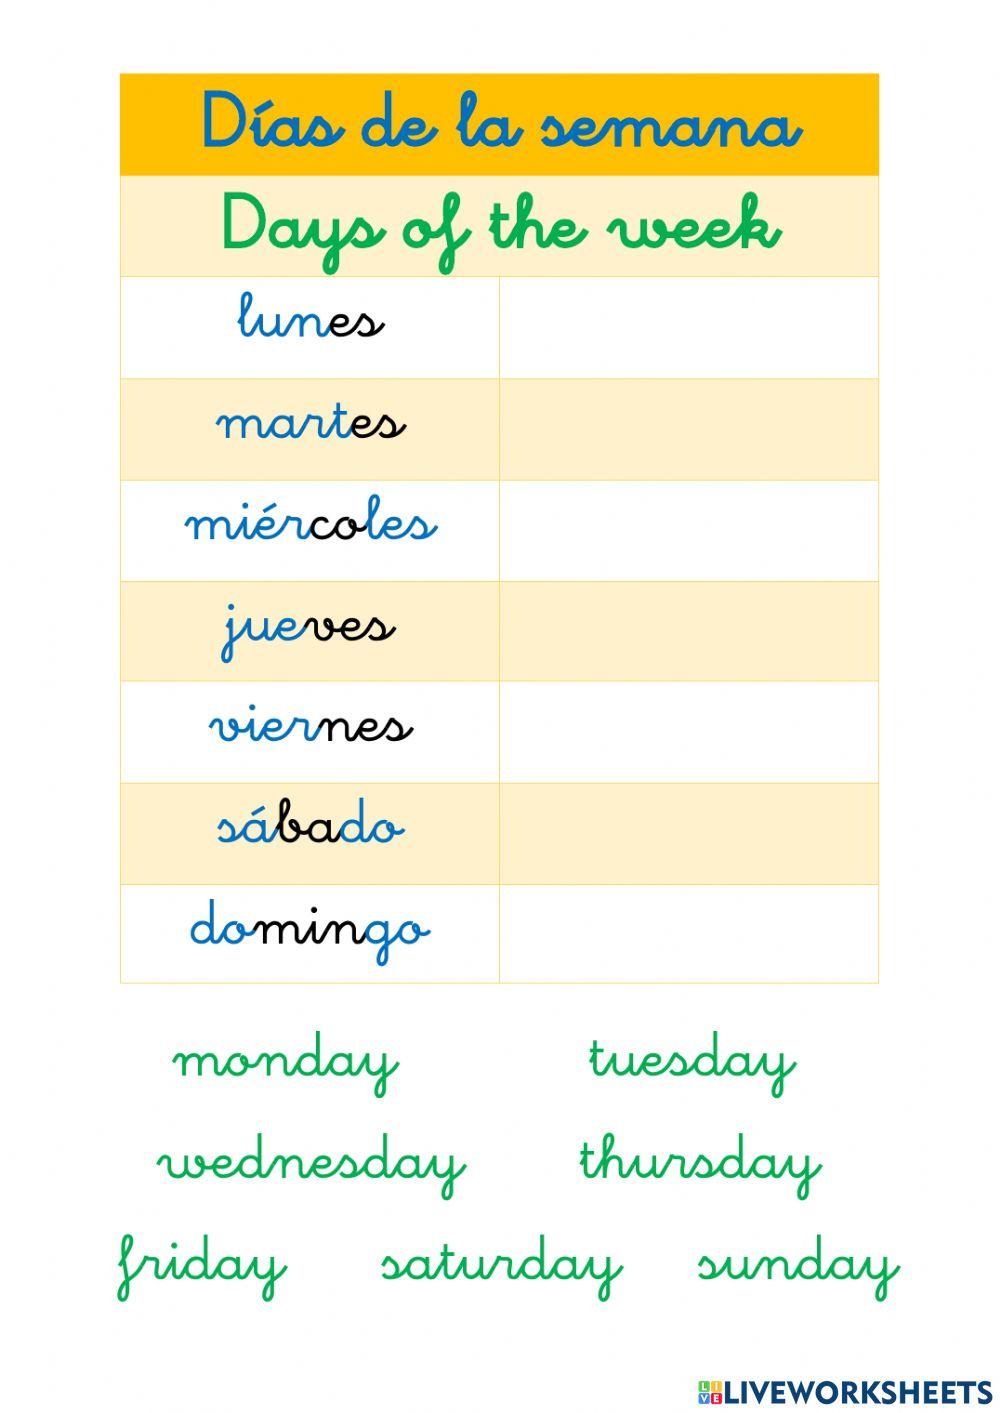 Dias de la semana - days of the week